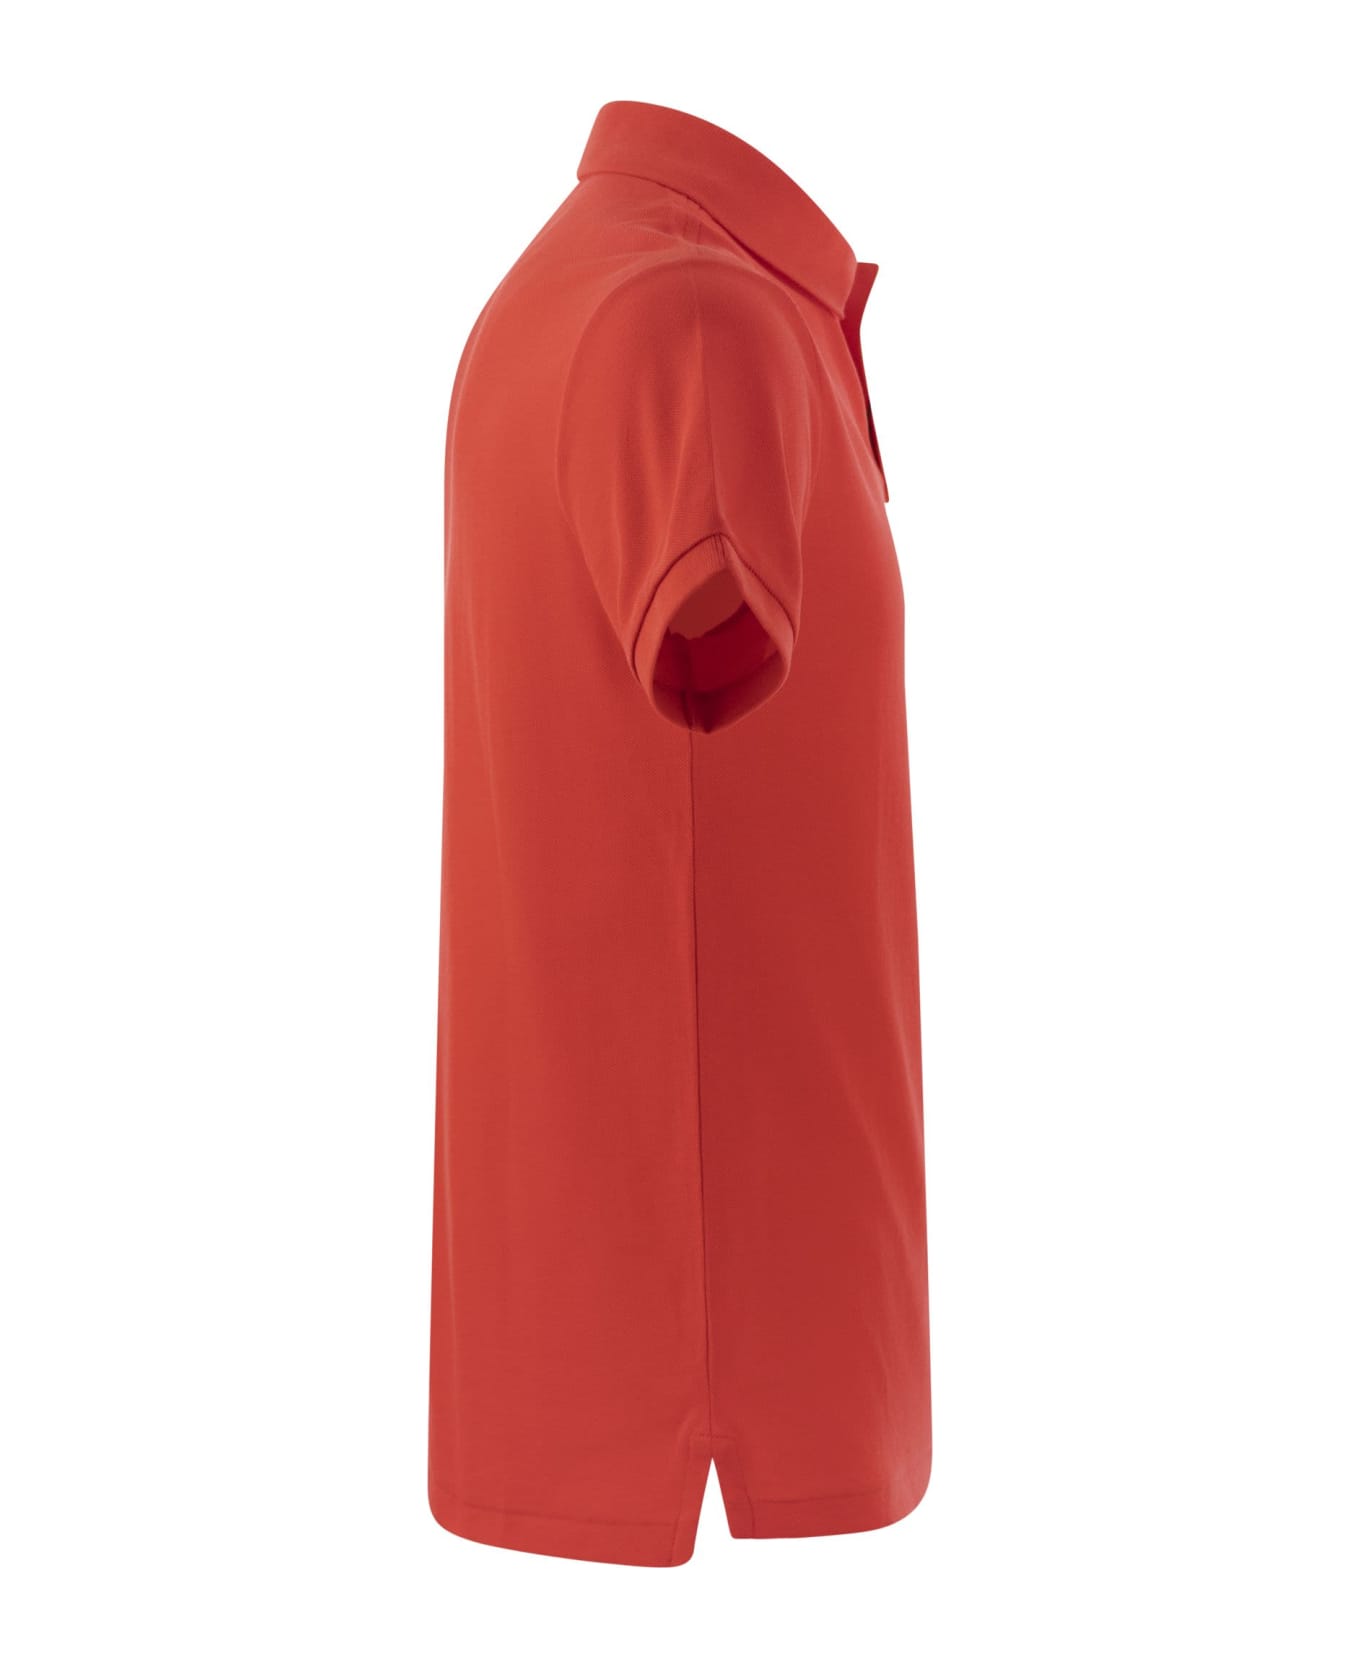 Polo Ralph Lauren Piqué Polo Shirt - Red ポロシャツ